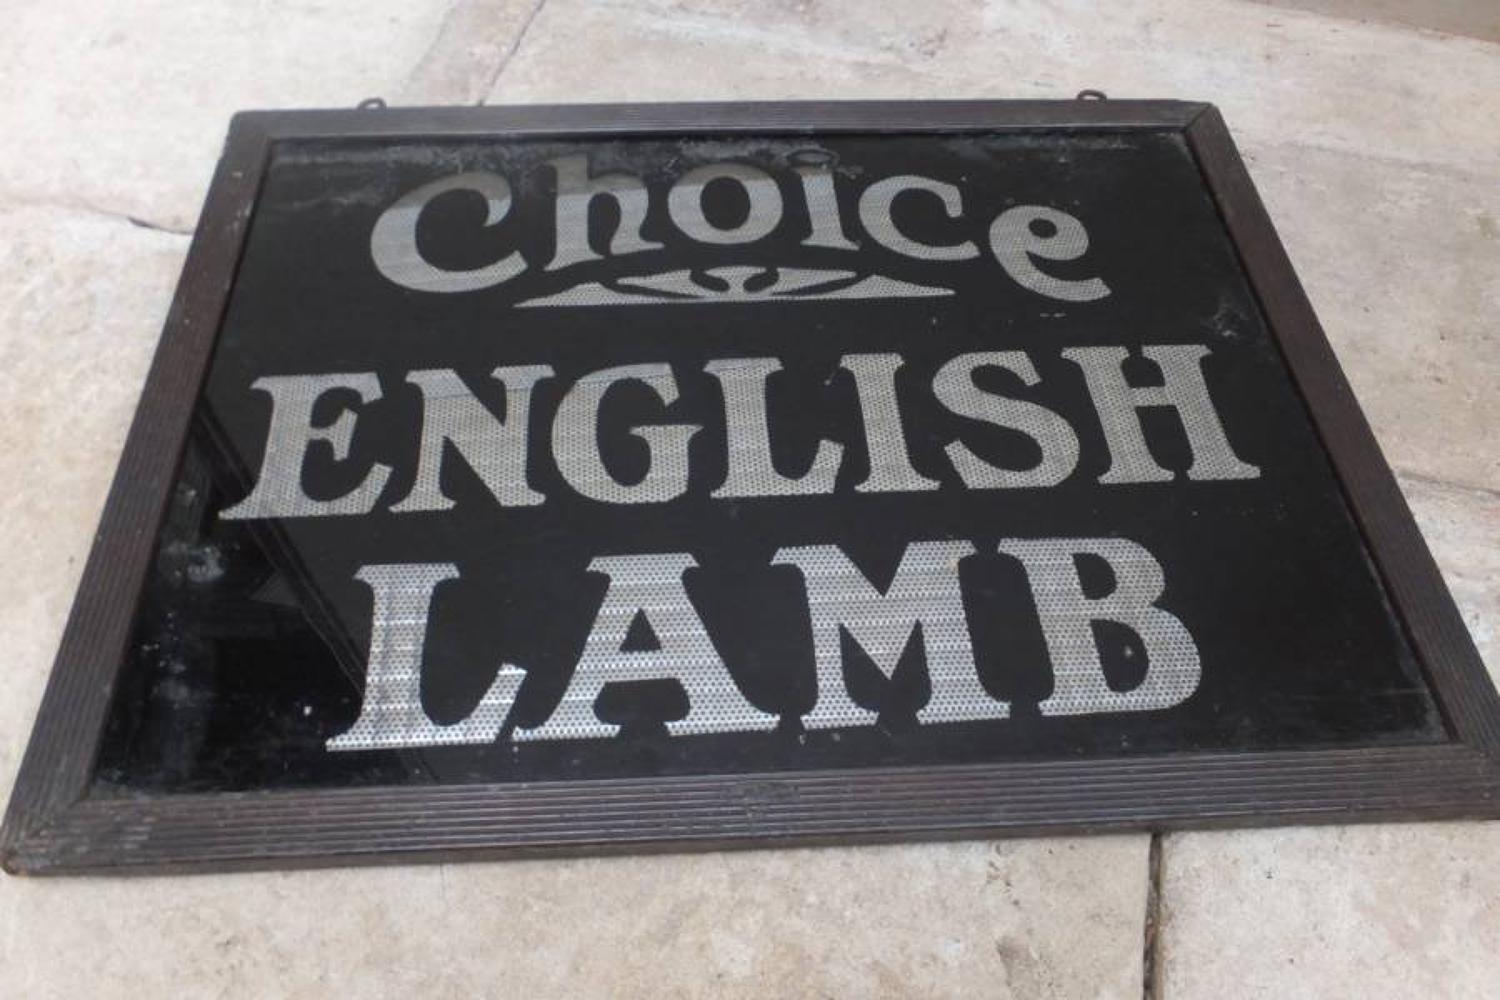 Rare Edwardian Glass Butchers Sign - Choice Engilsh Lamb